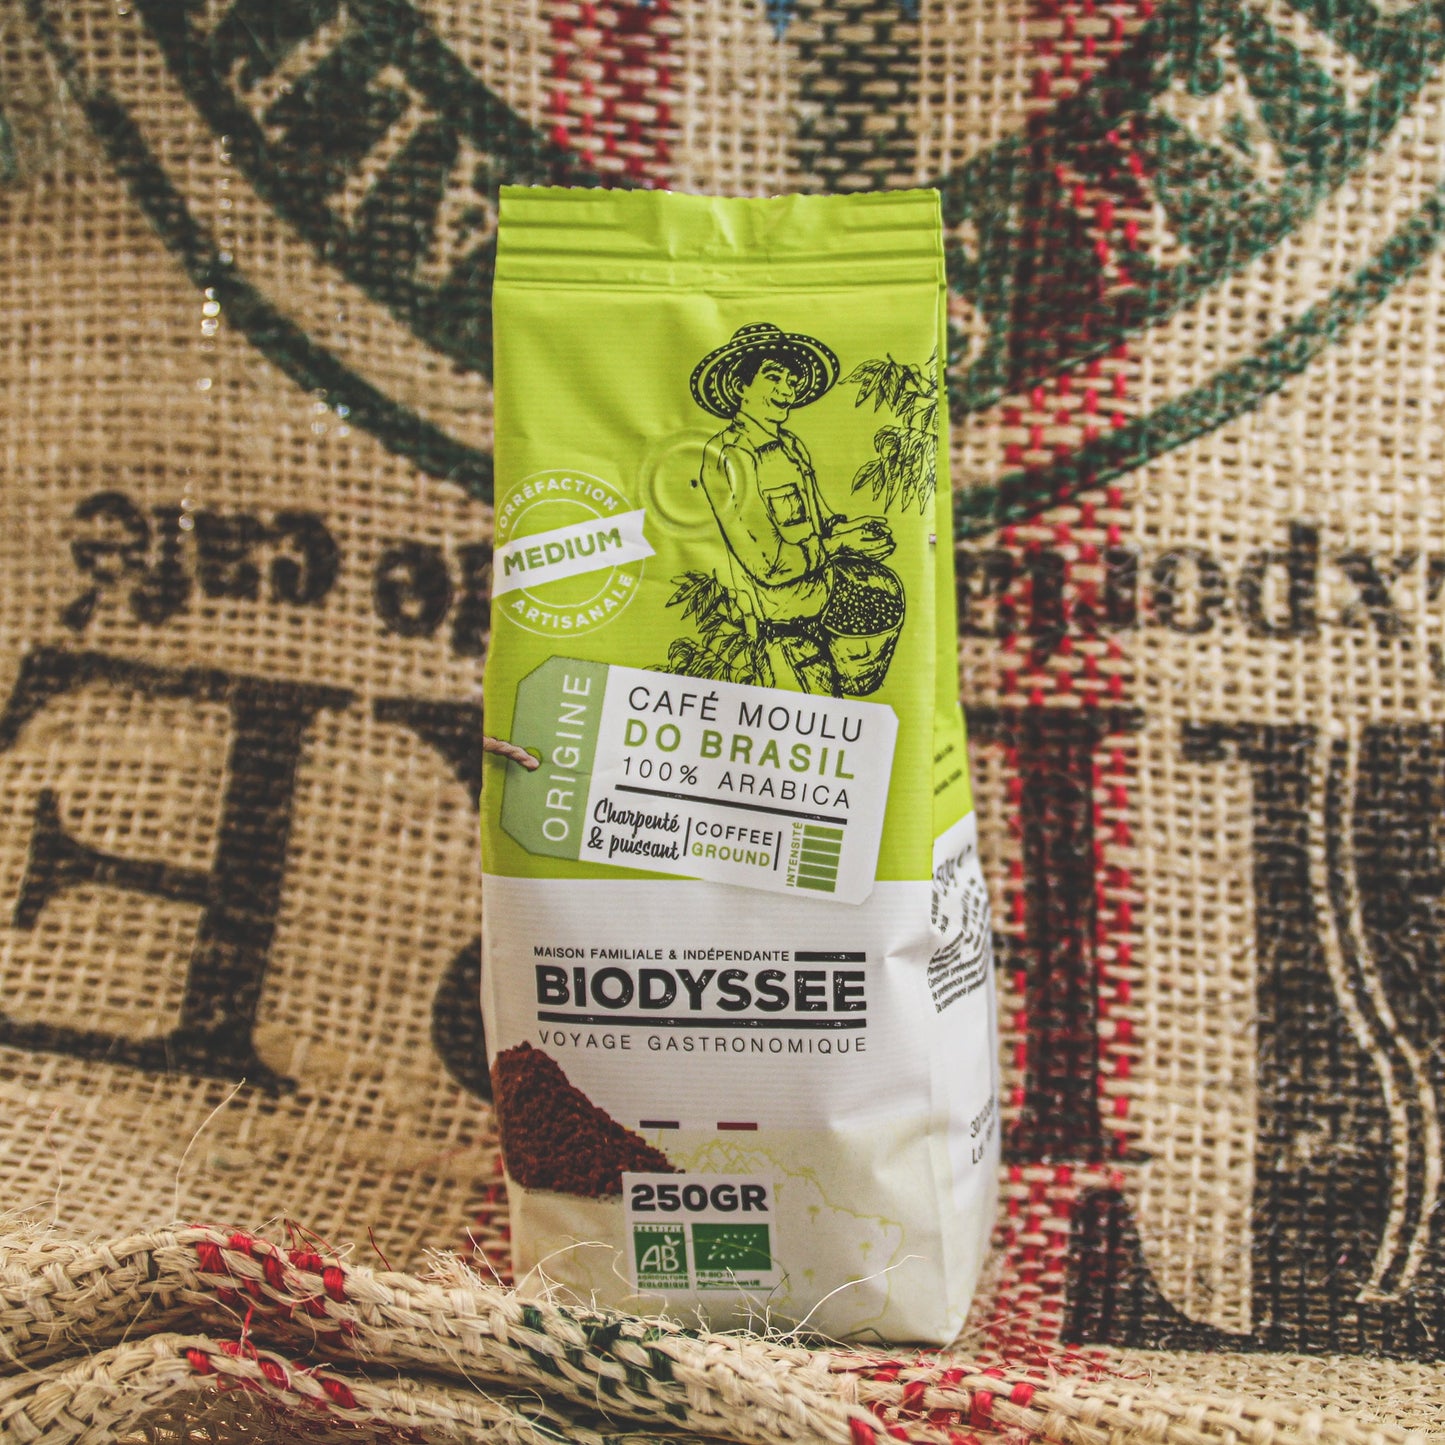 Biodyssée -- Café moulu origine 100% arabica bio (origine Brésil) - 250 g